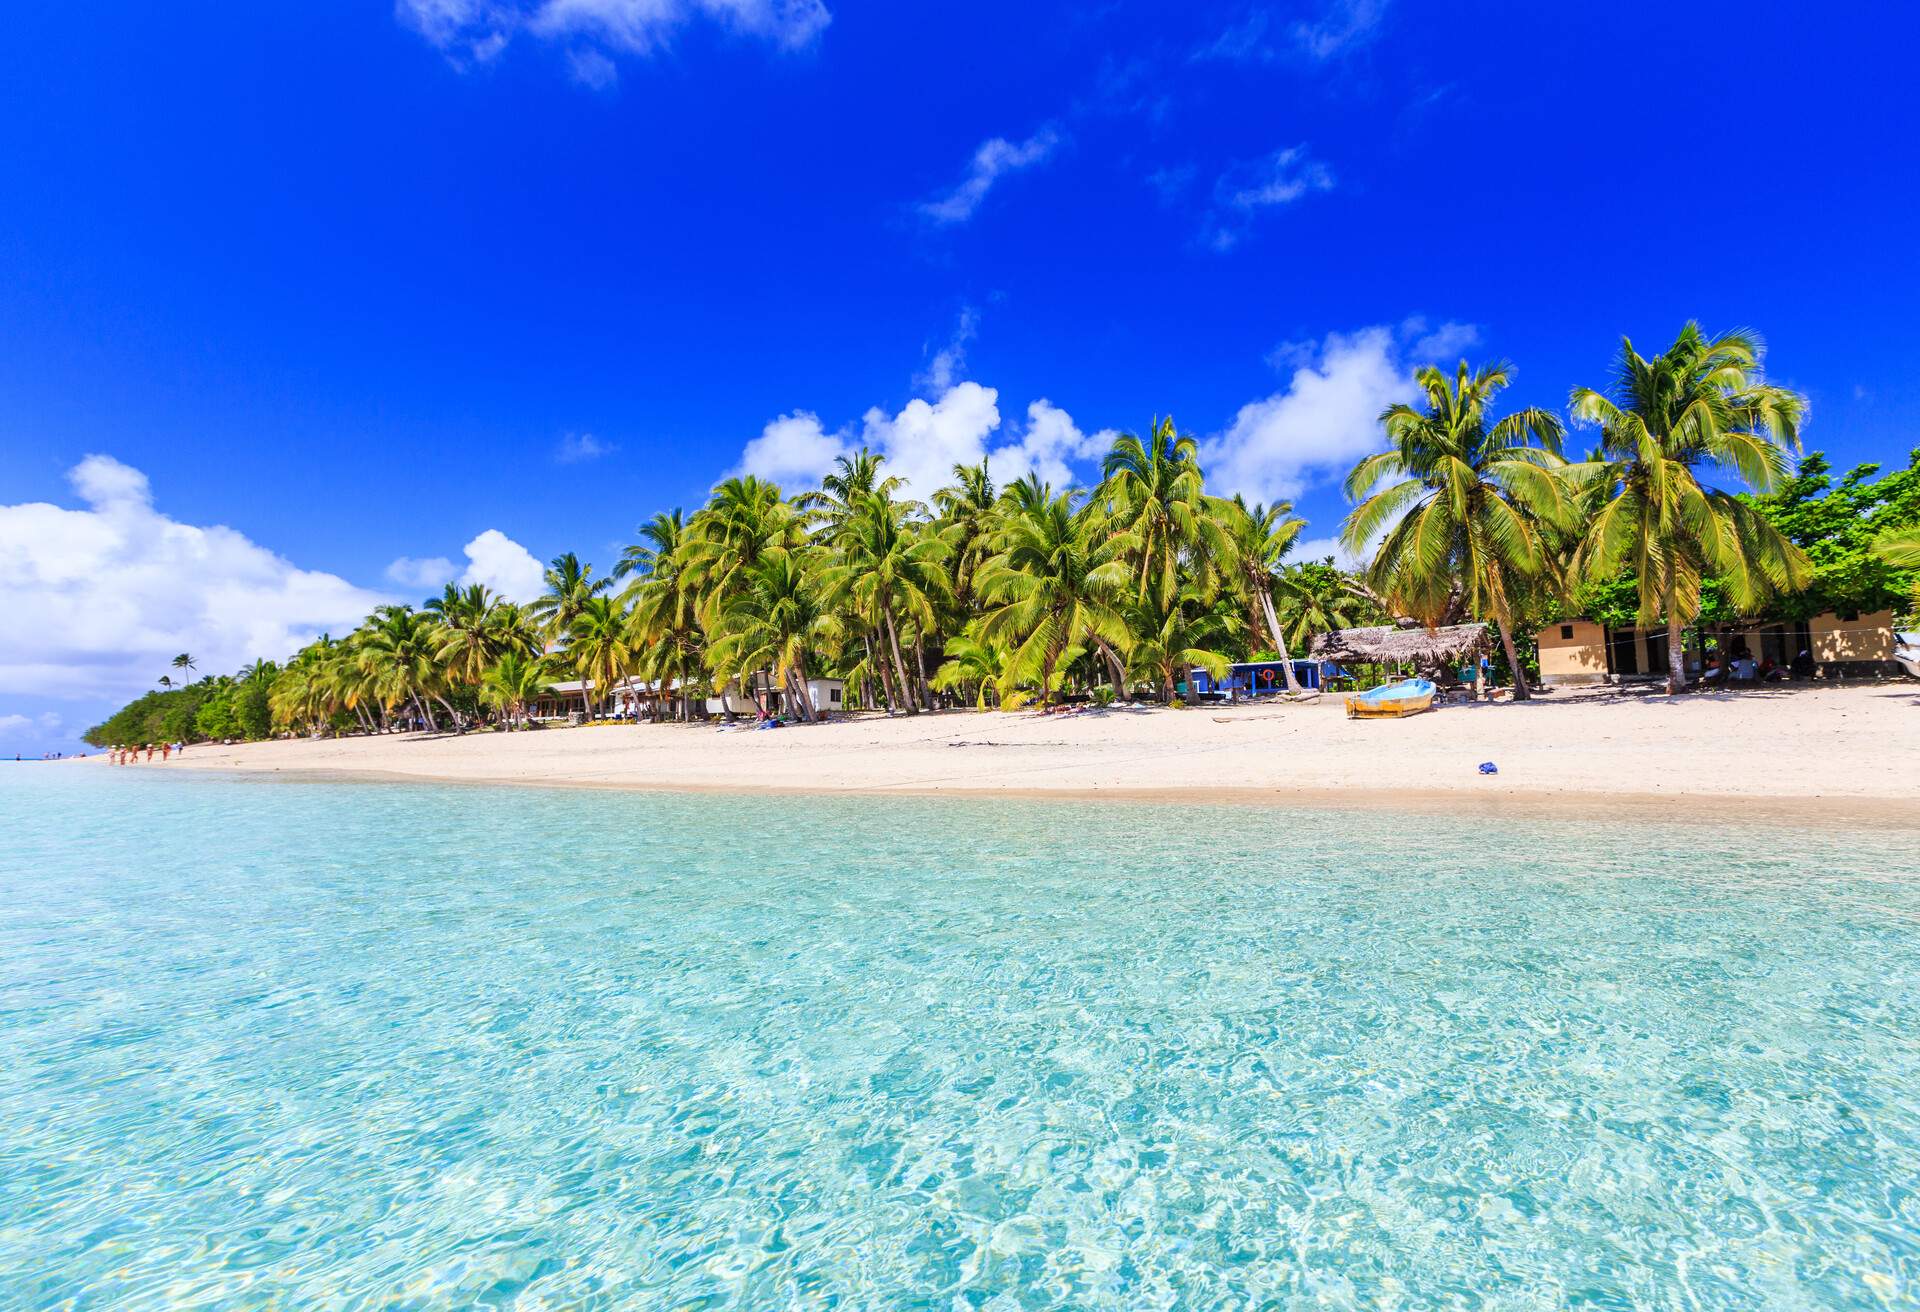 Beach on a tropical island with clear blue water. Dravuni Island, Fiji